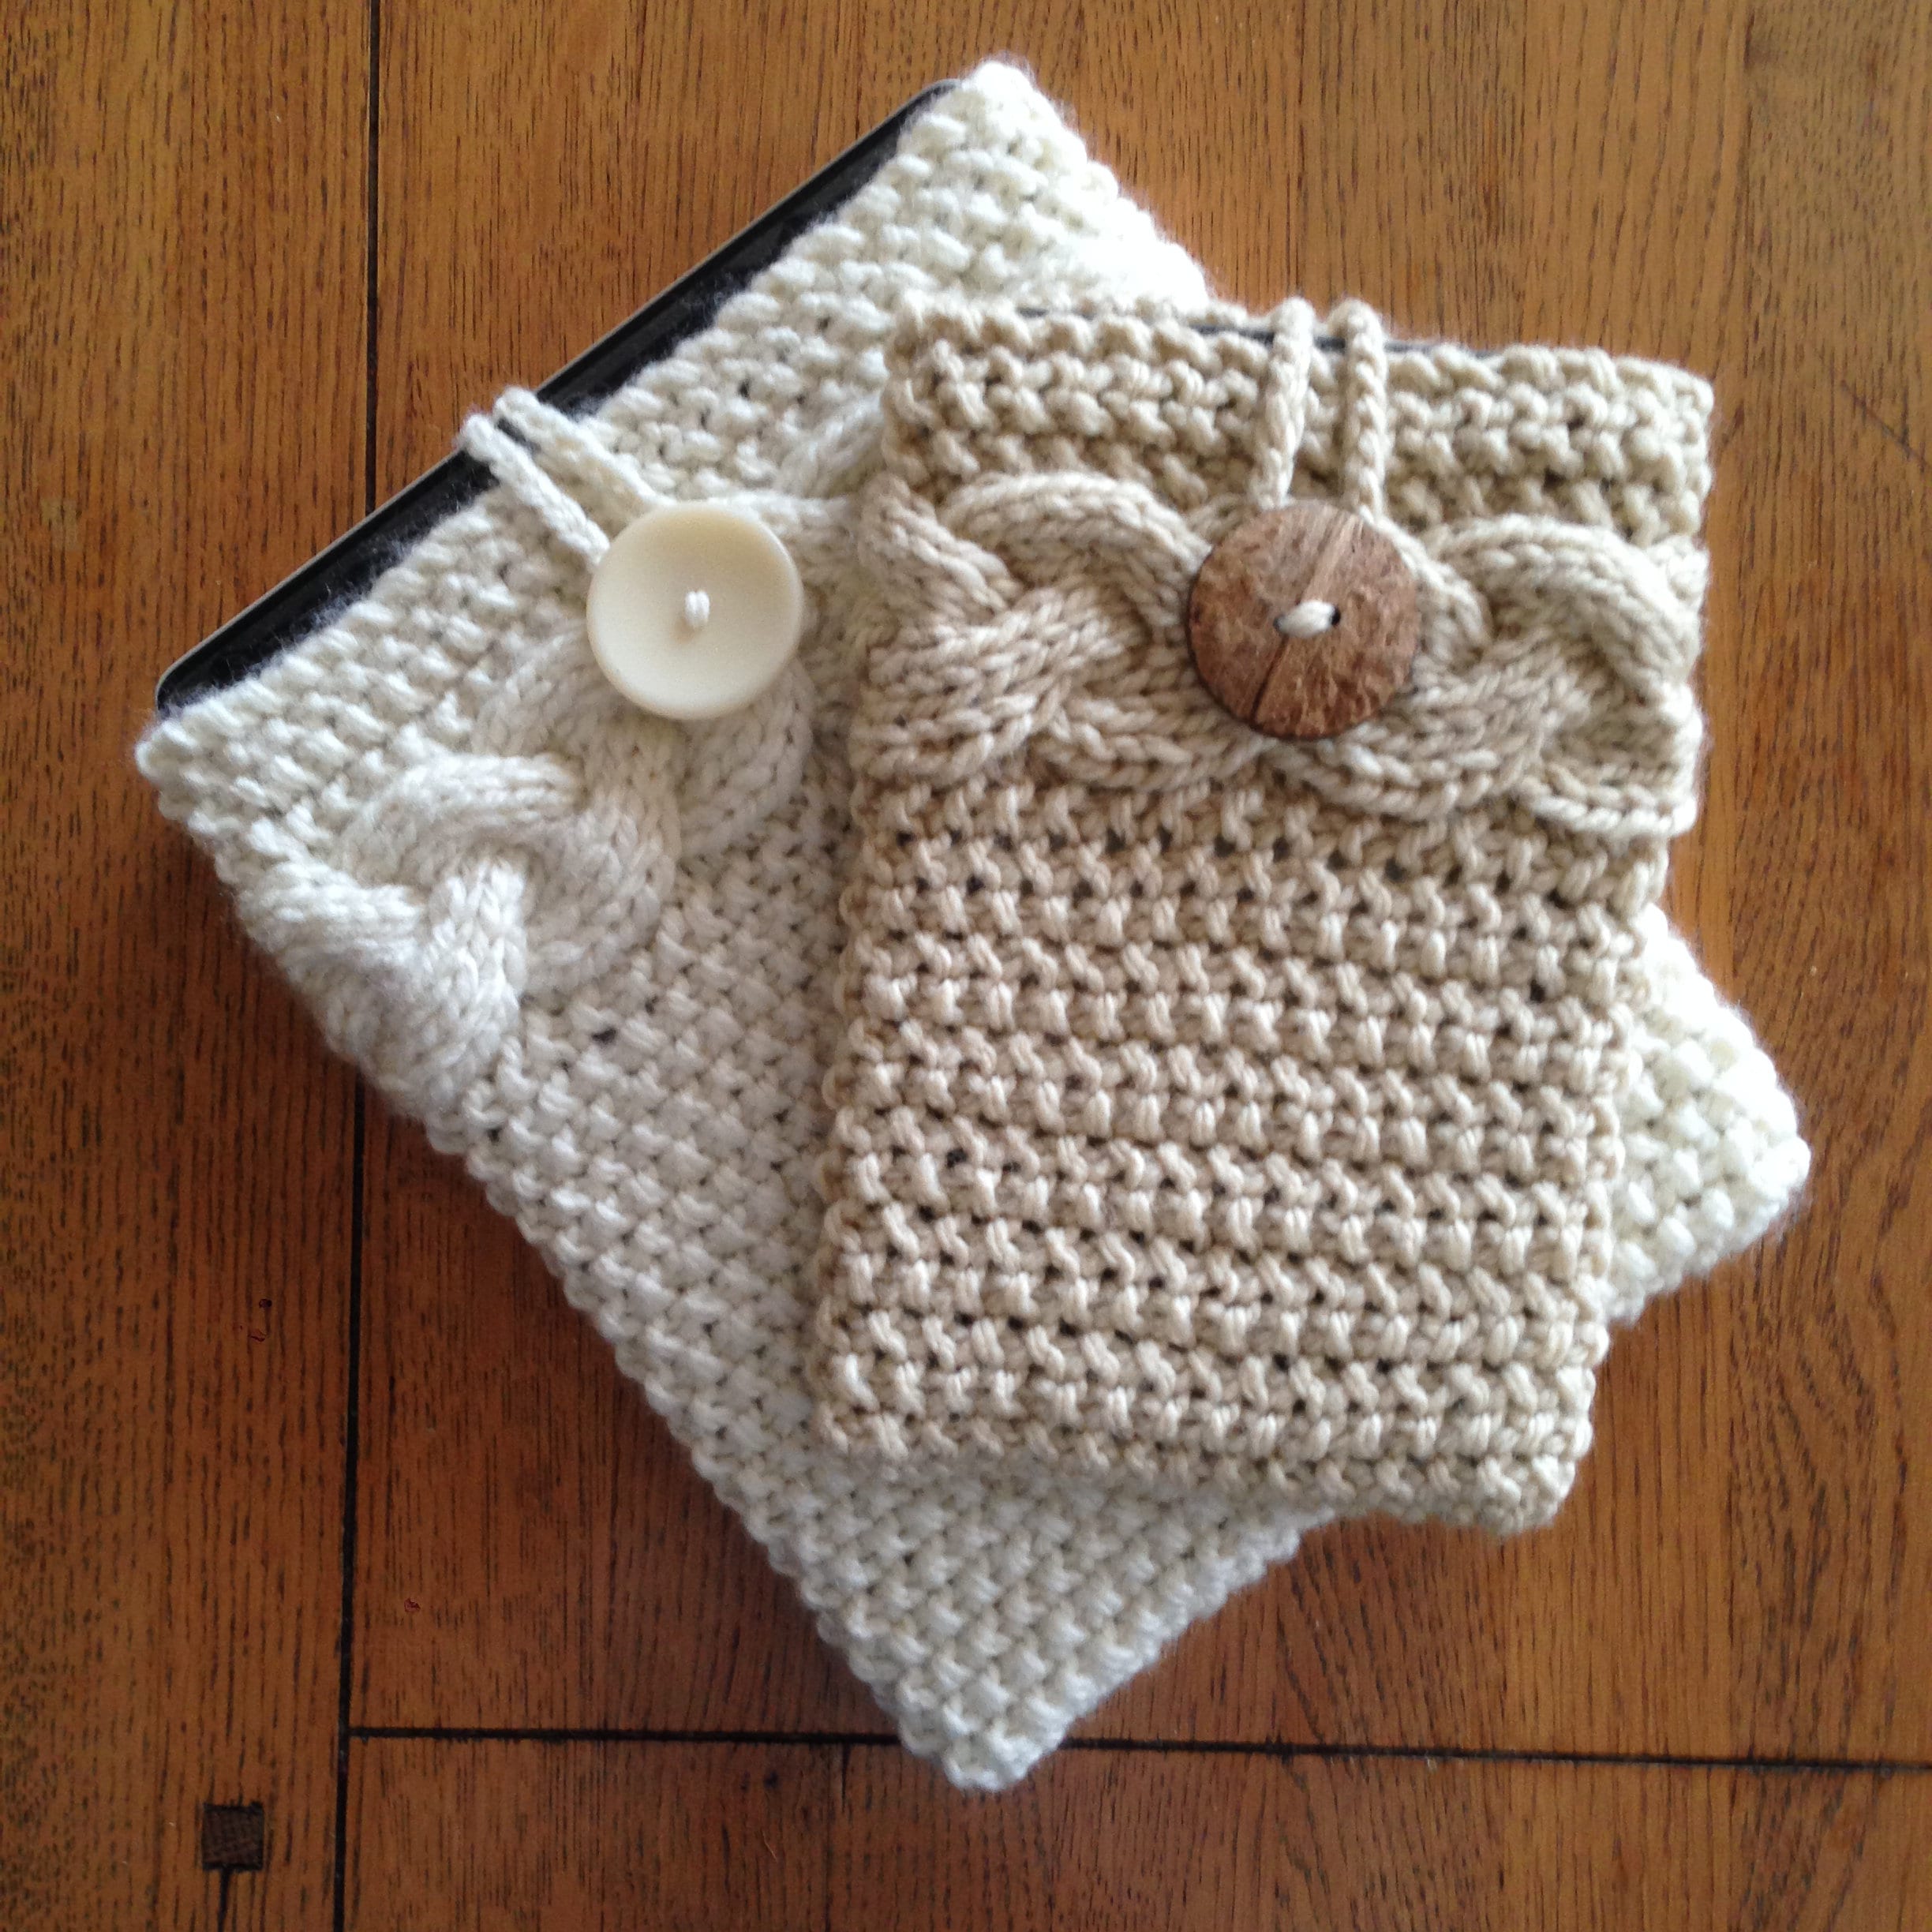 DIY Craft and Knitting Bag ORGANIZER + Free Pattern - The Crafting Nook